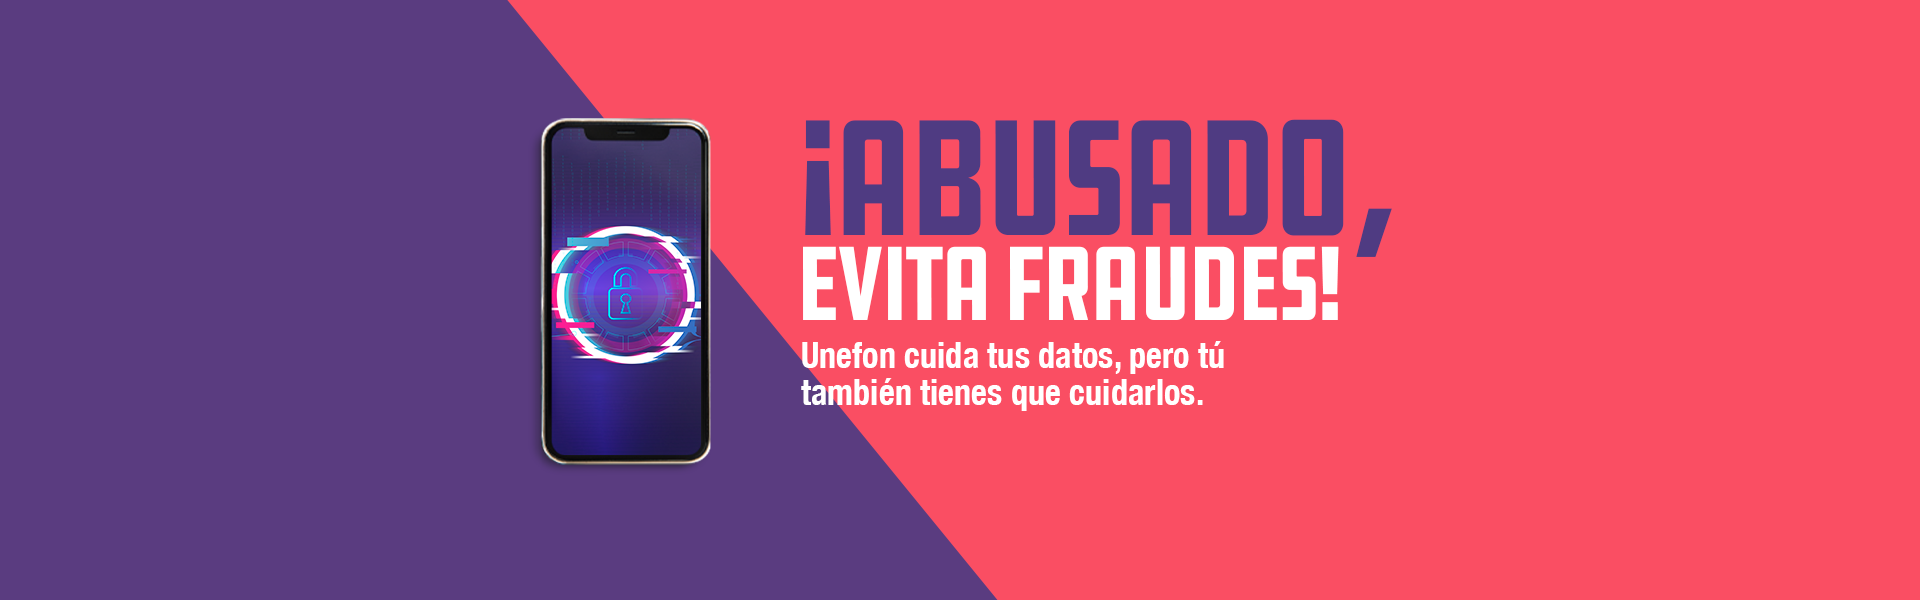 UNEFON INFORMACIÓN PORTABILIDAD EVITA FRAUDES - Banner desktop